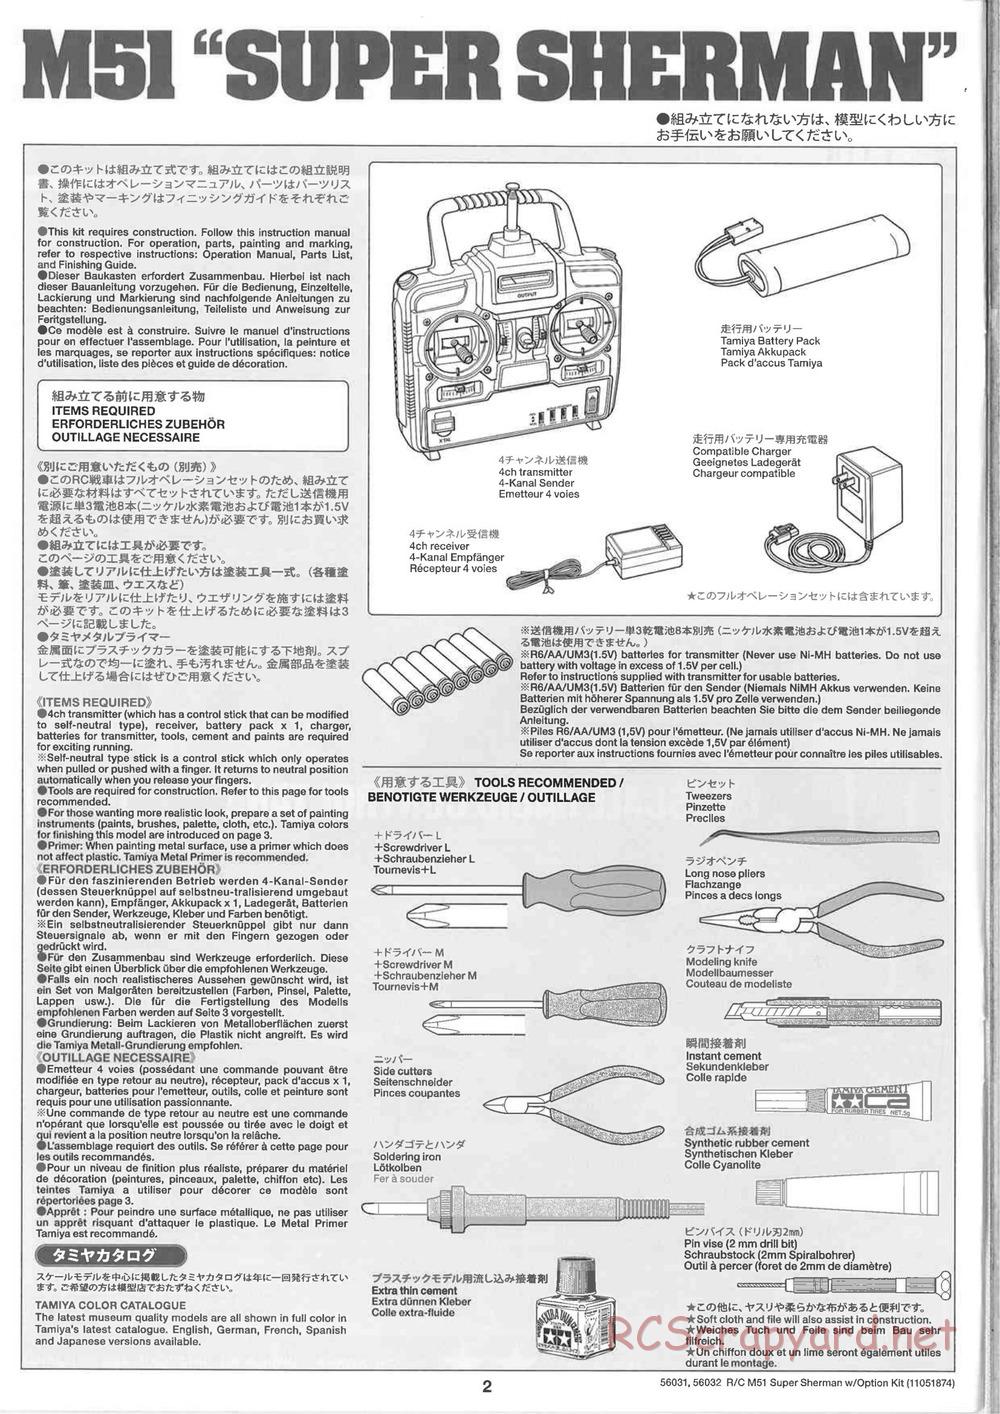 Tamiya - Super Sherman M-51 - 1/16 Scale Chassis - Manual - Page 2